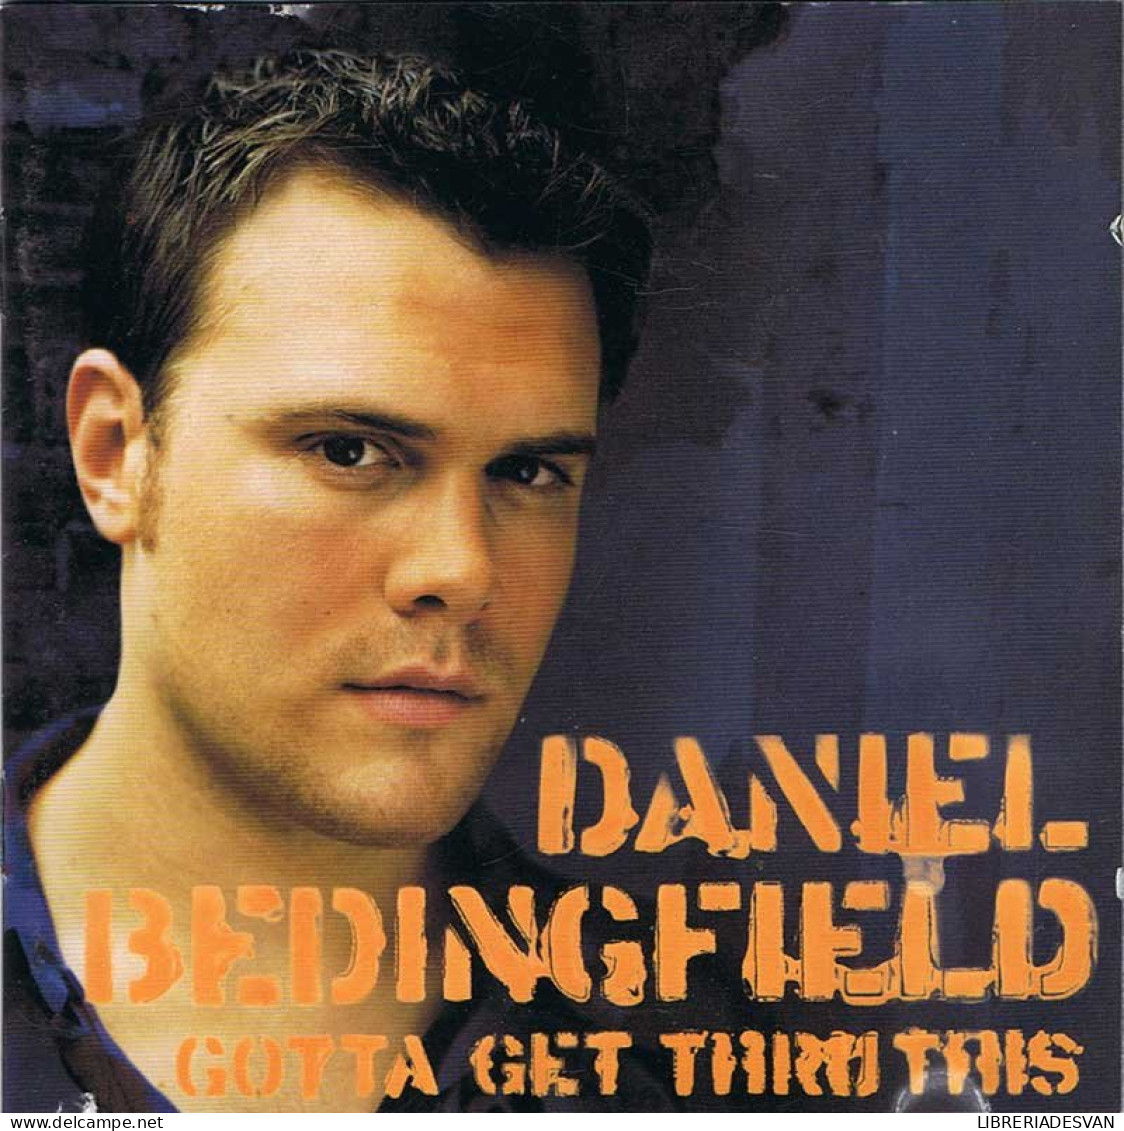 Daniel Bedingfield - Gotta Get Thru This. CD - Disco, Pop